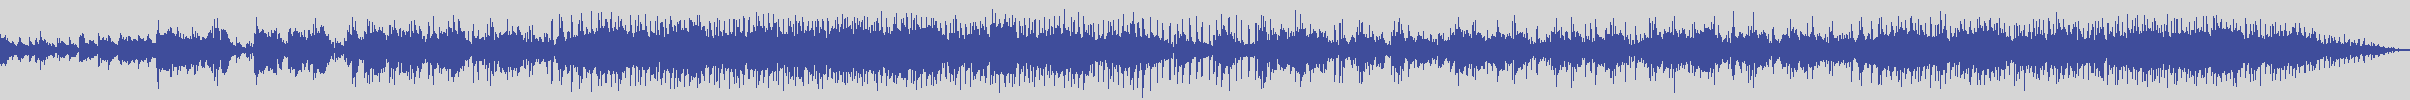 digiphonic_records [DPR008] Salvatore Adamo - Alla Grande [Original Mix] audio wave form